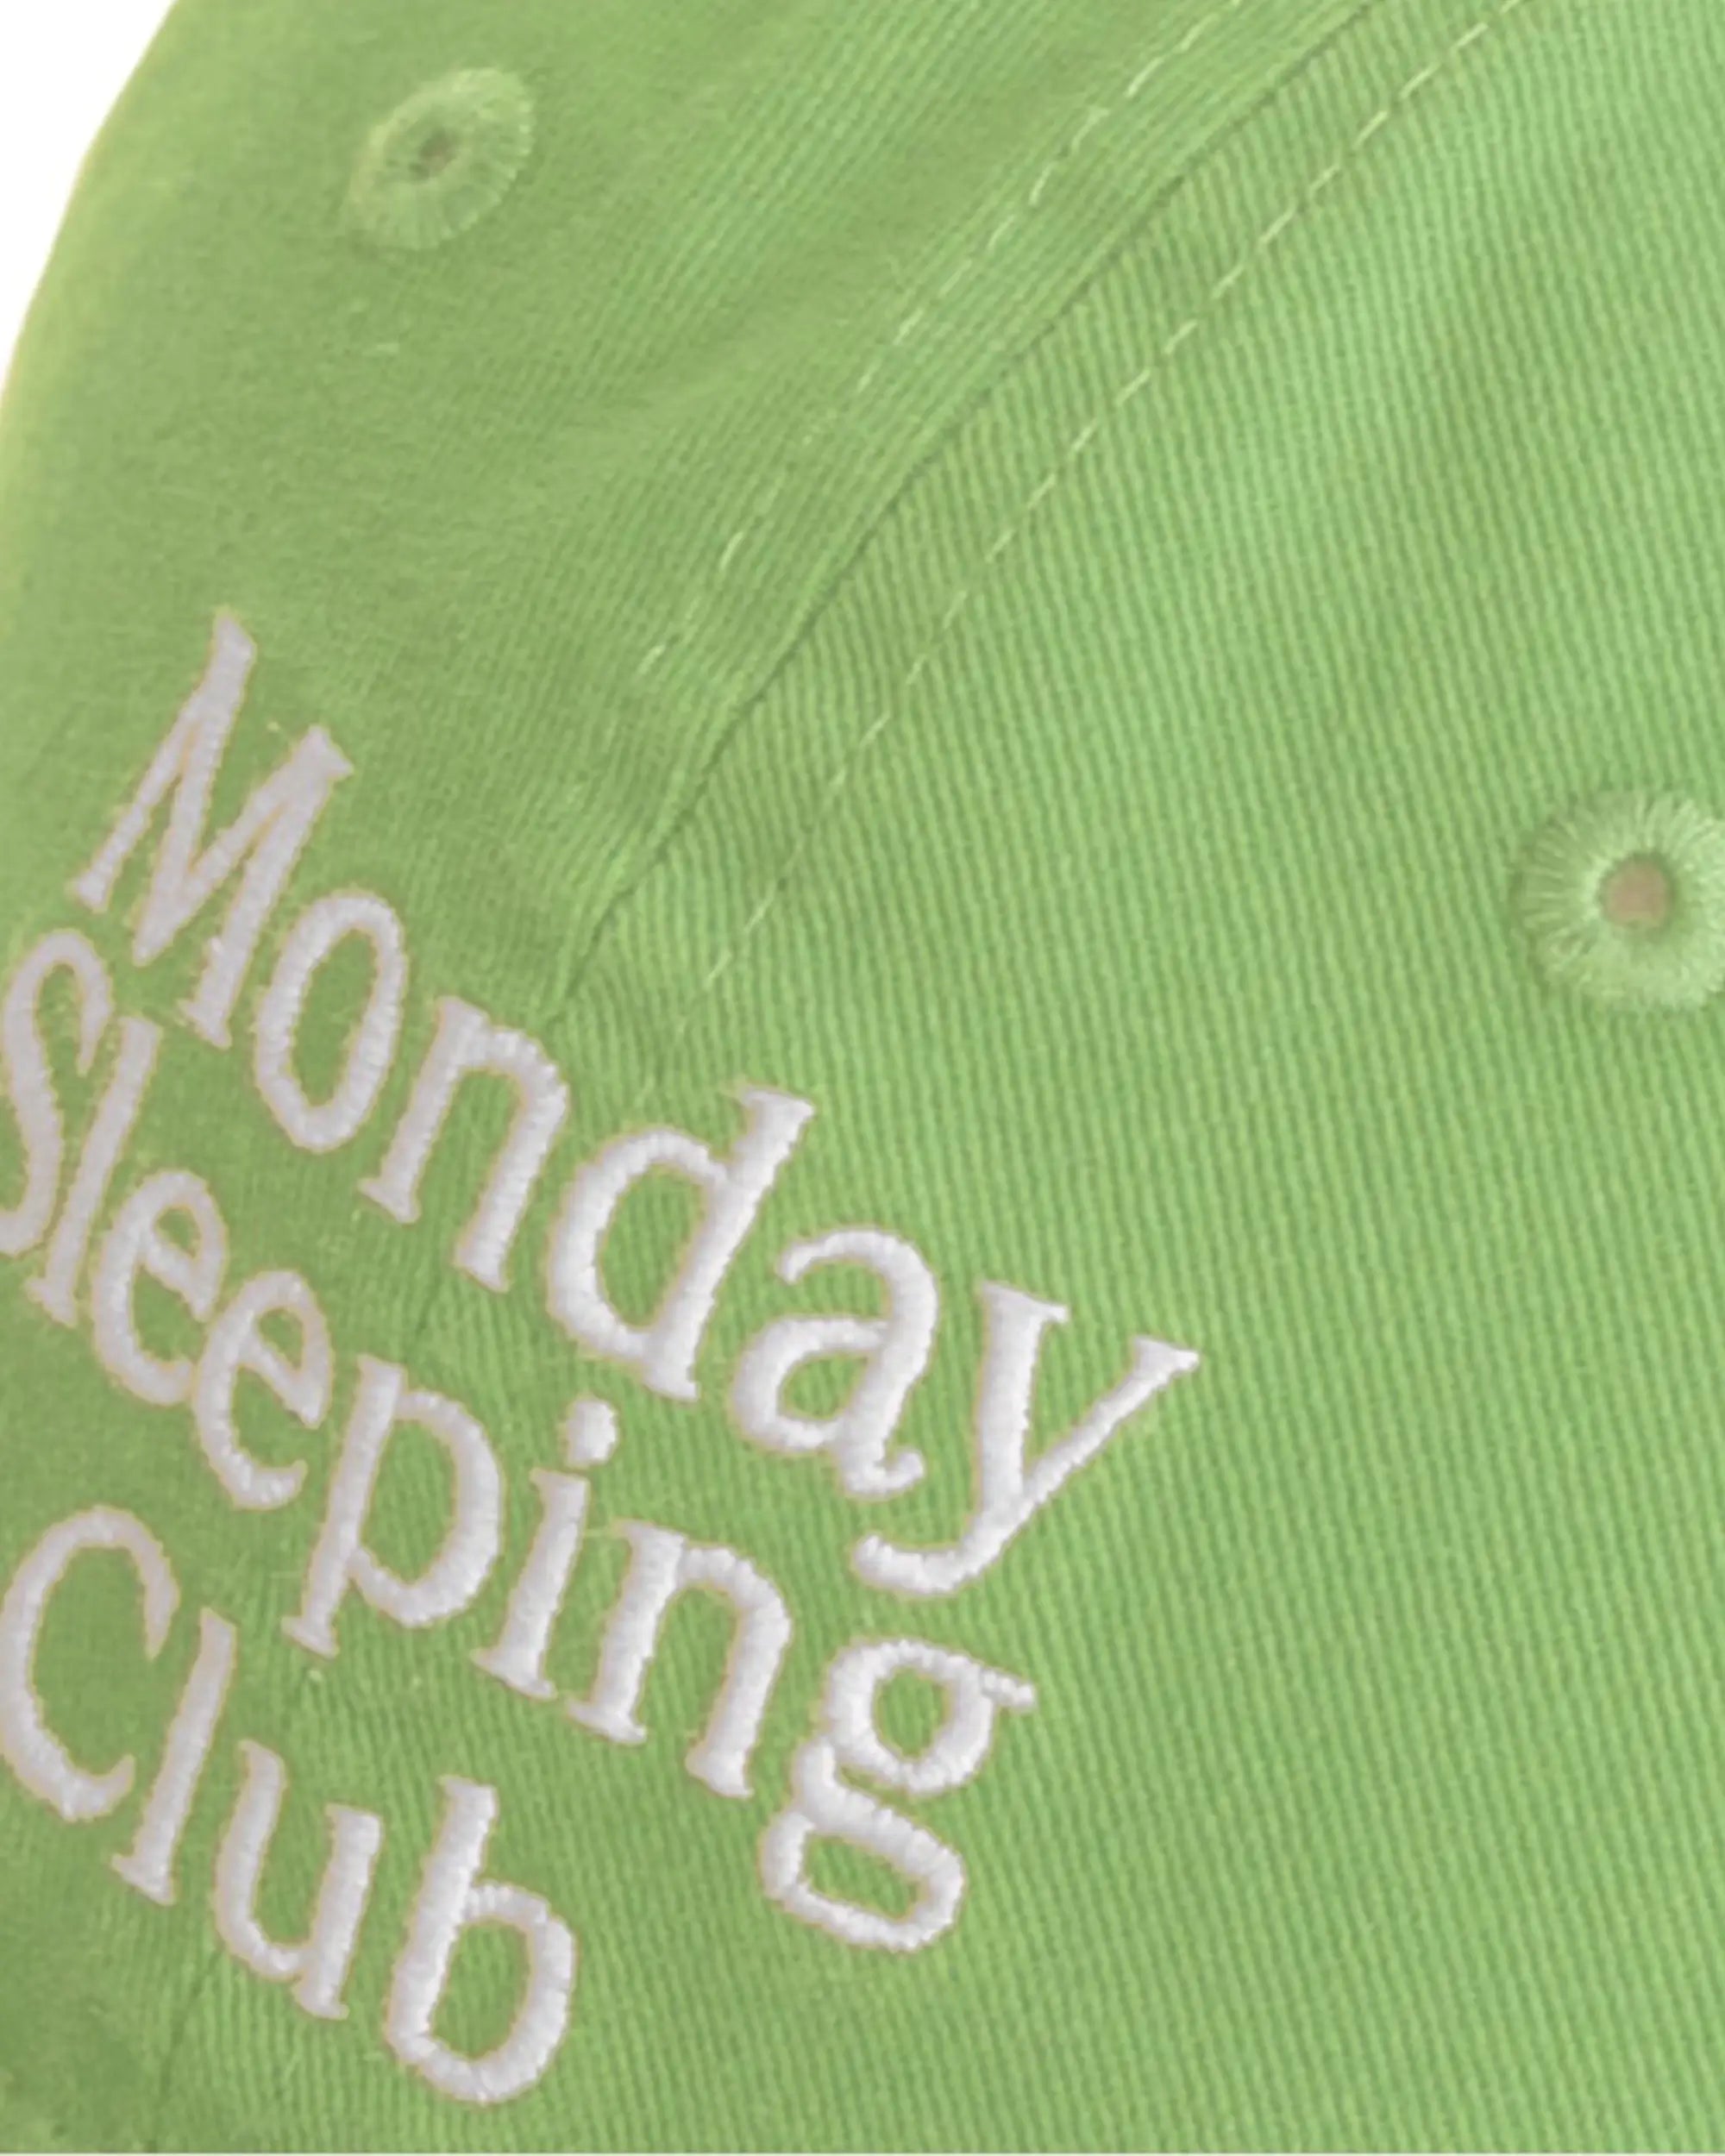 Monday Sleeping Club Standard Logo Embroidered Baseball Cap